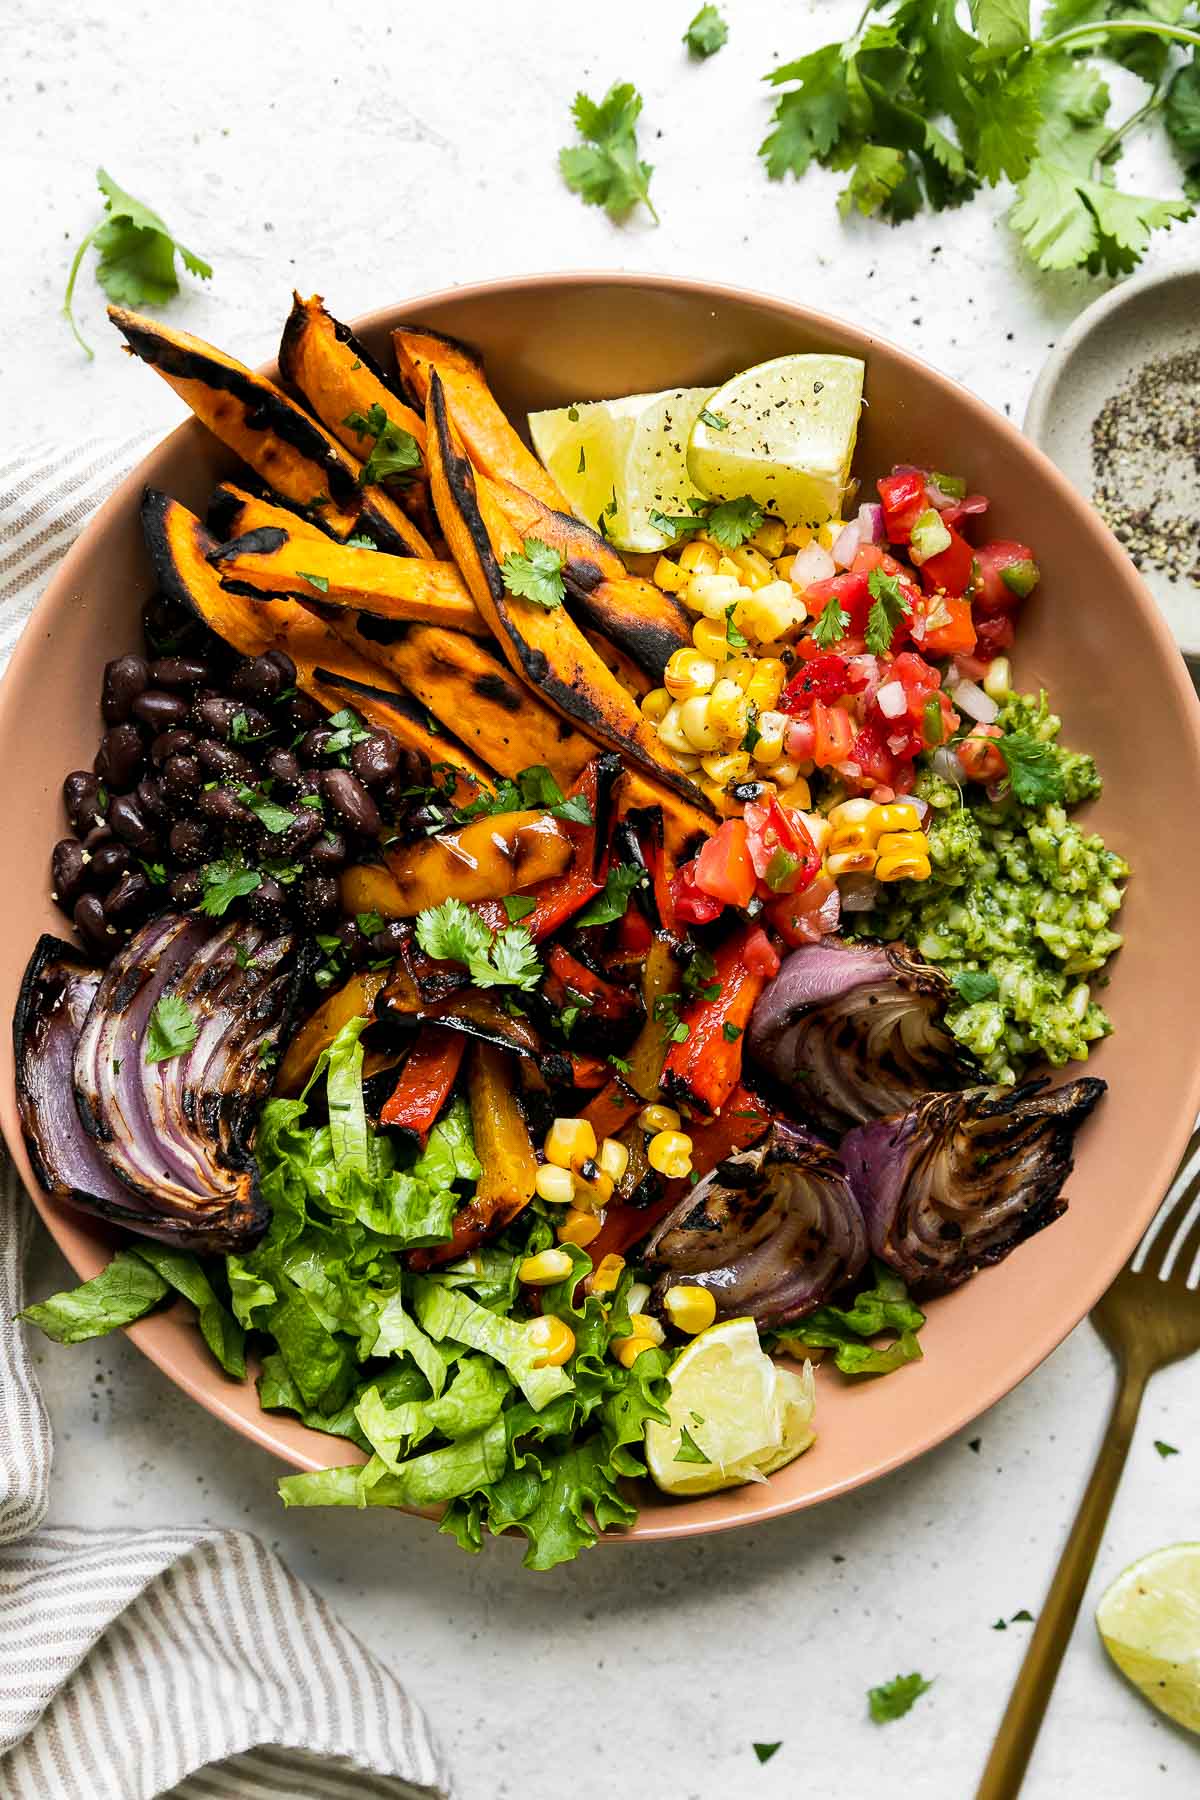 https://playswellwithbutter.com/wp-content/uploads/2022/06/Veggie-Burrito-Bowls-with-Green-Rice-Vegan-Vegetarian-10.jpg